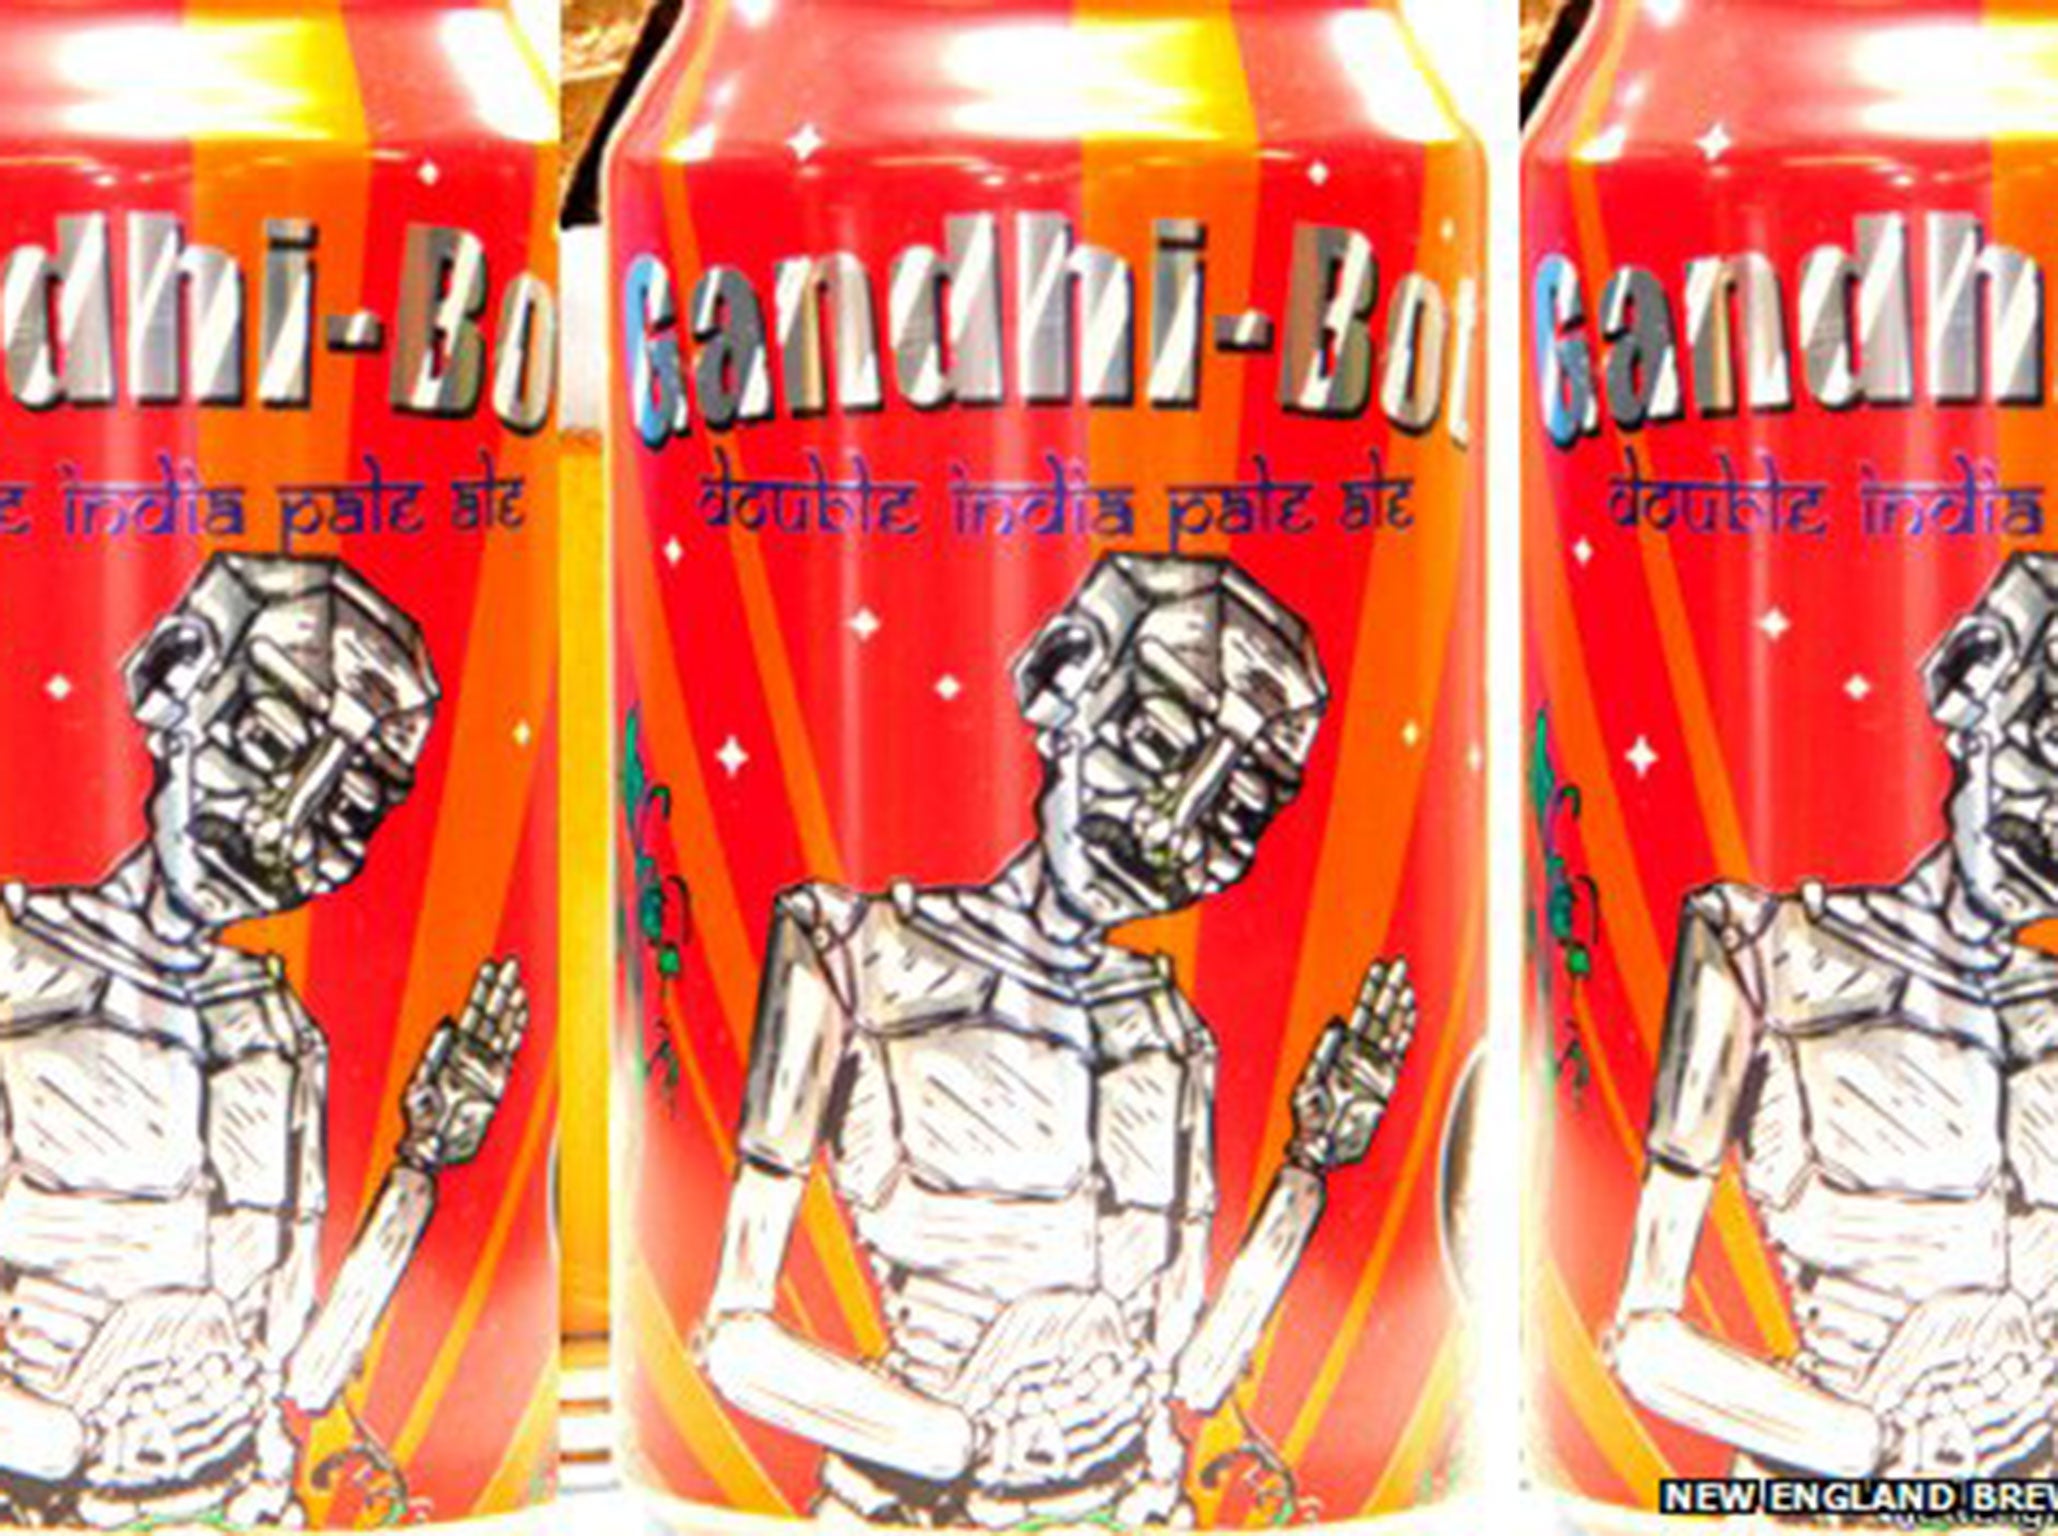 Gandhi-bot beer is an India pale ale